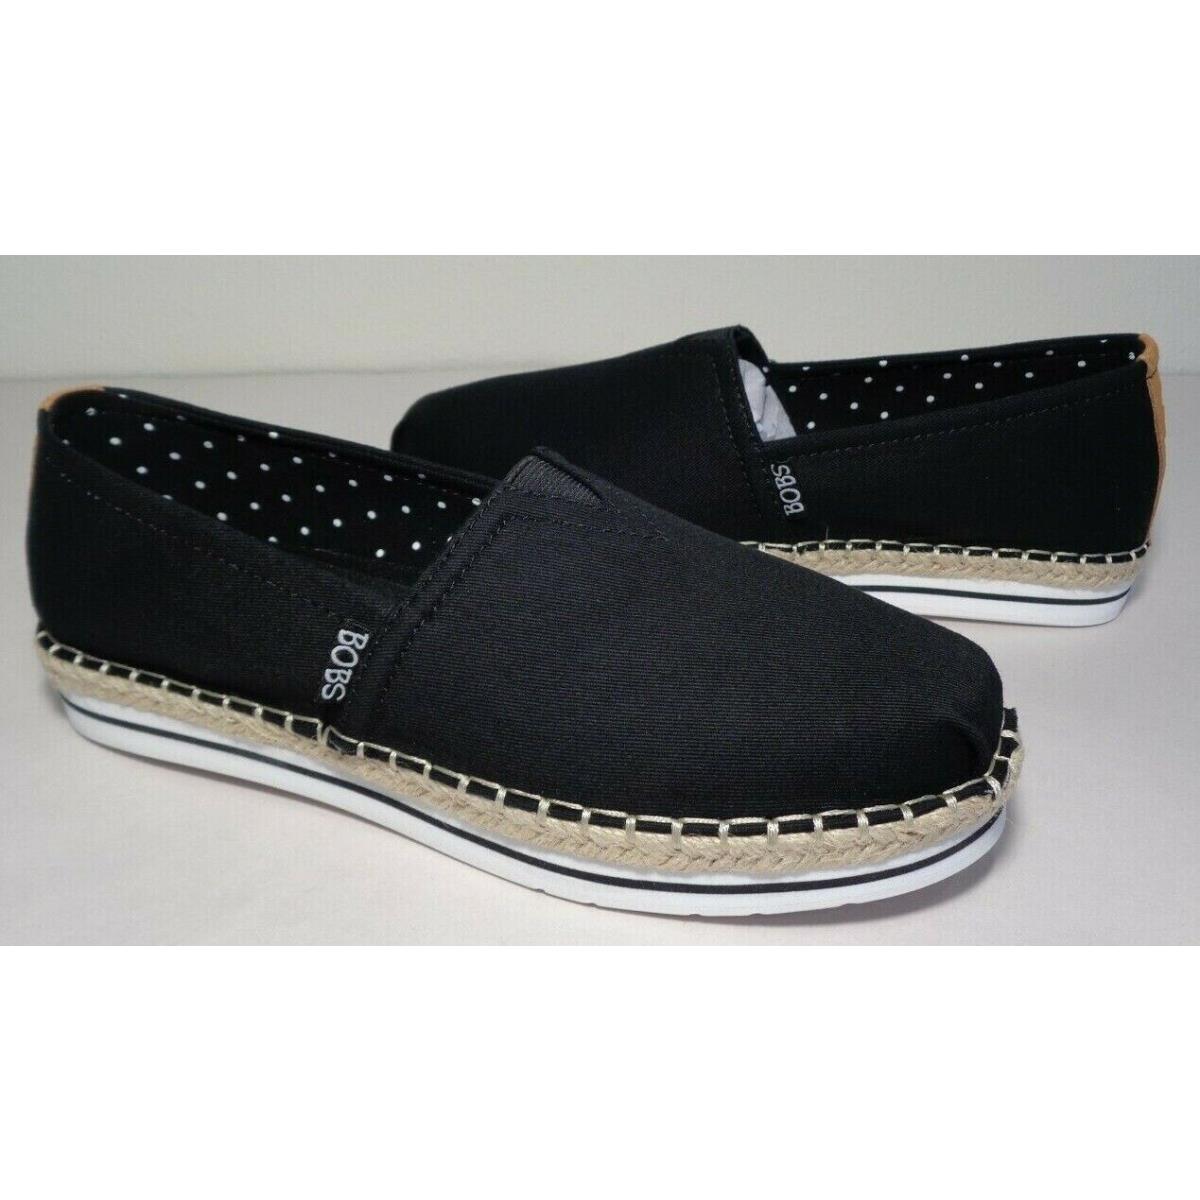 Skechers Bobs Size 7.5 Breeze Black Canvas Jute Loafers Flats Womens Shoes